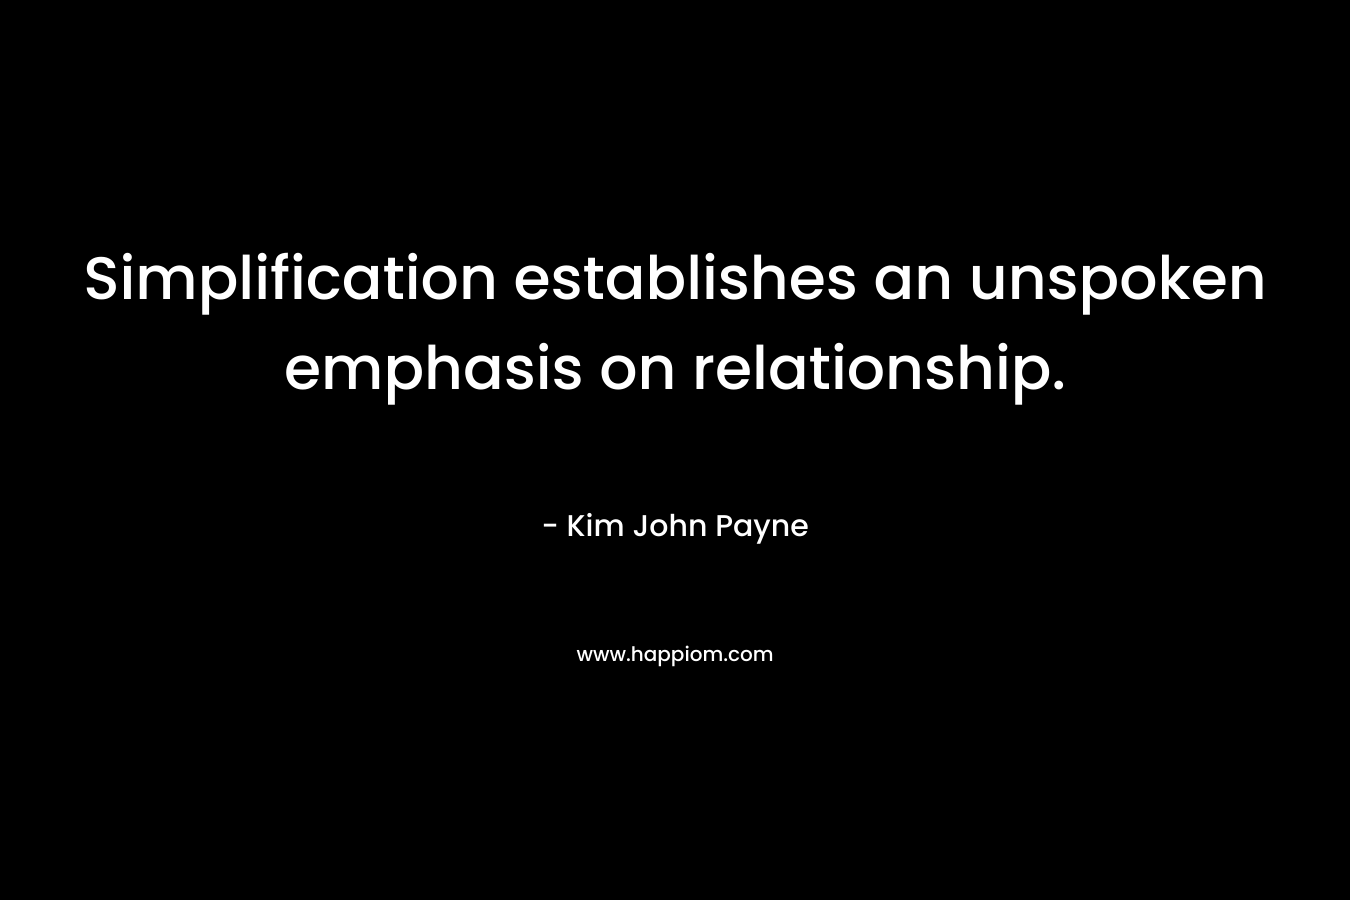 Simplification establishes an unspoken emphasis on relationship.